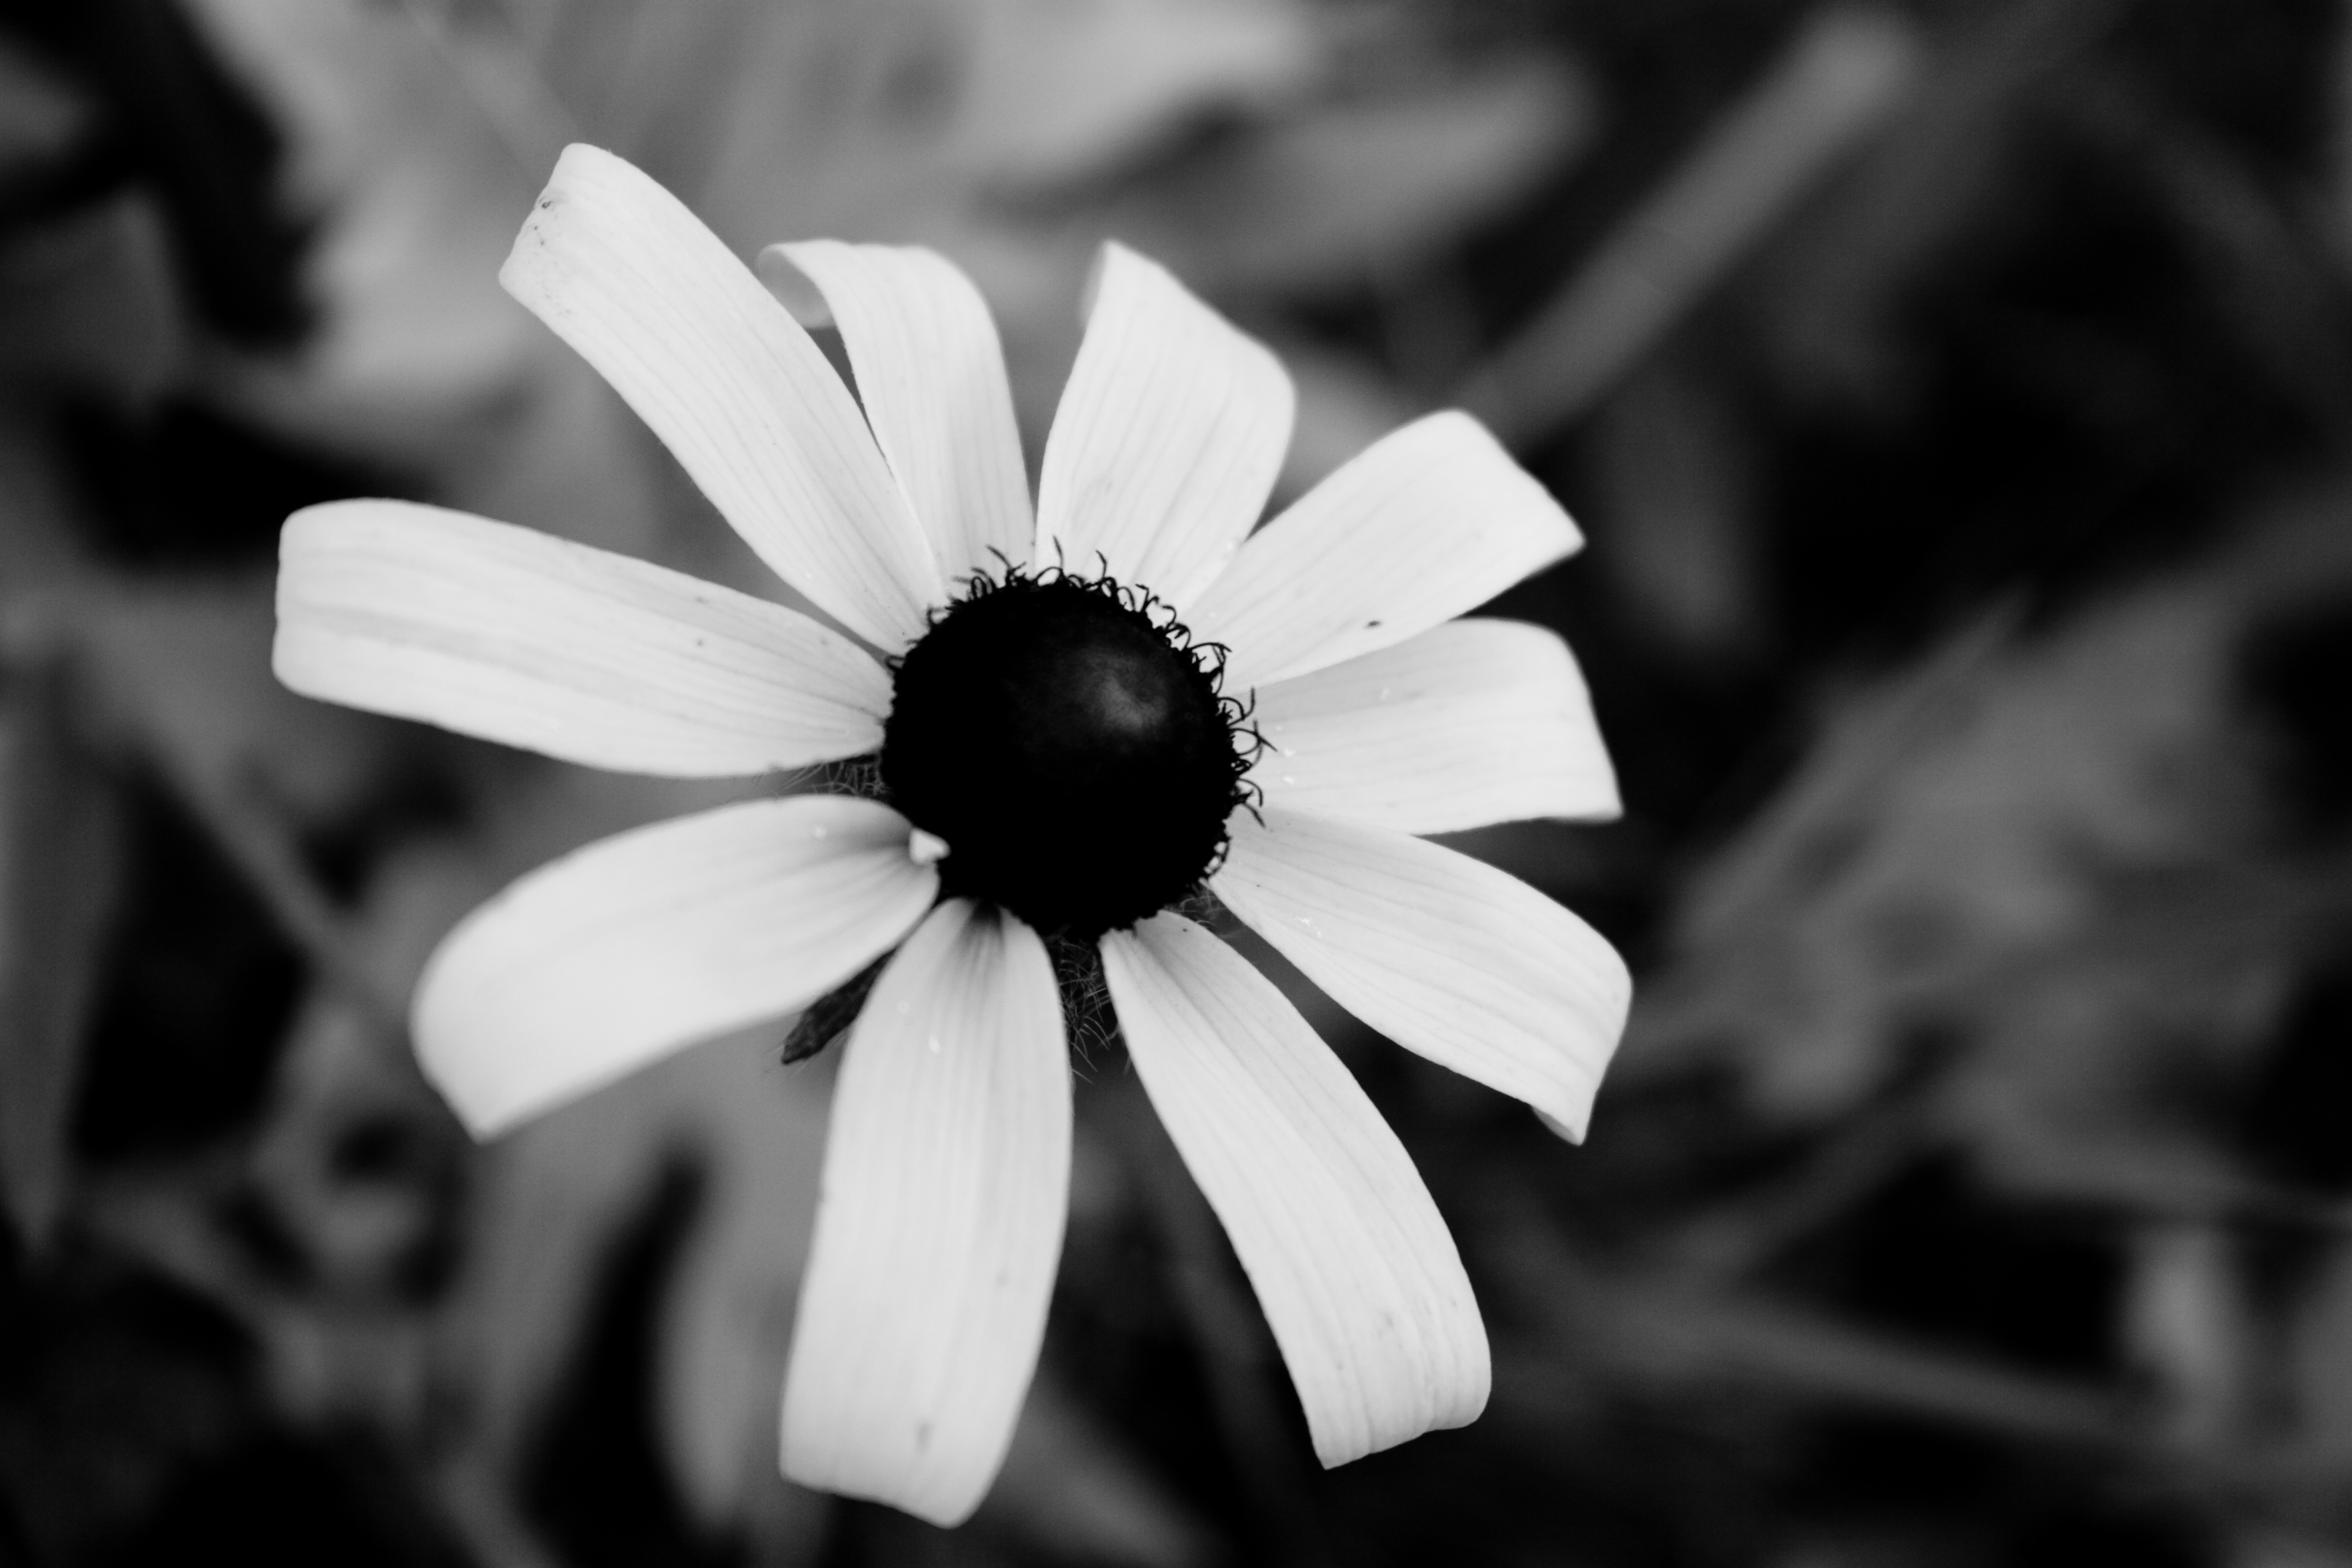 carta da parati fiore bianco e nero,bianca,fotografia in bianco e nero,bianco e nero,petalo,nero